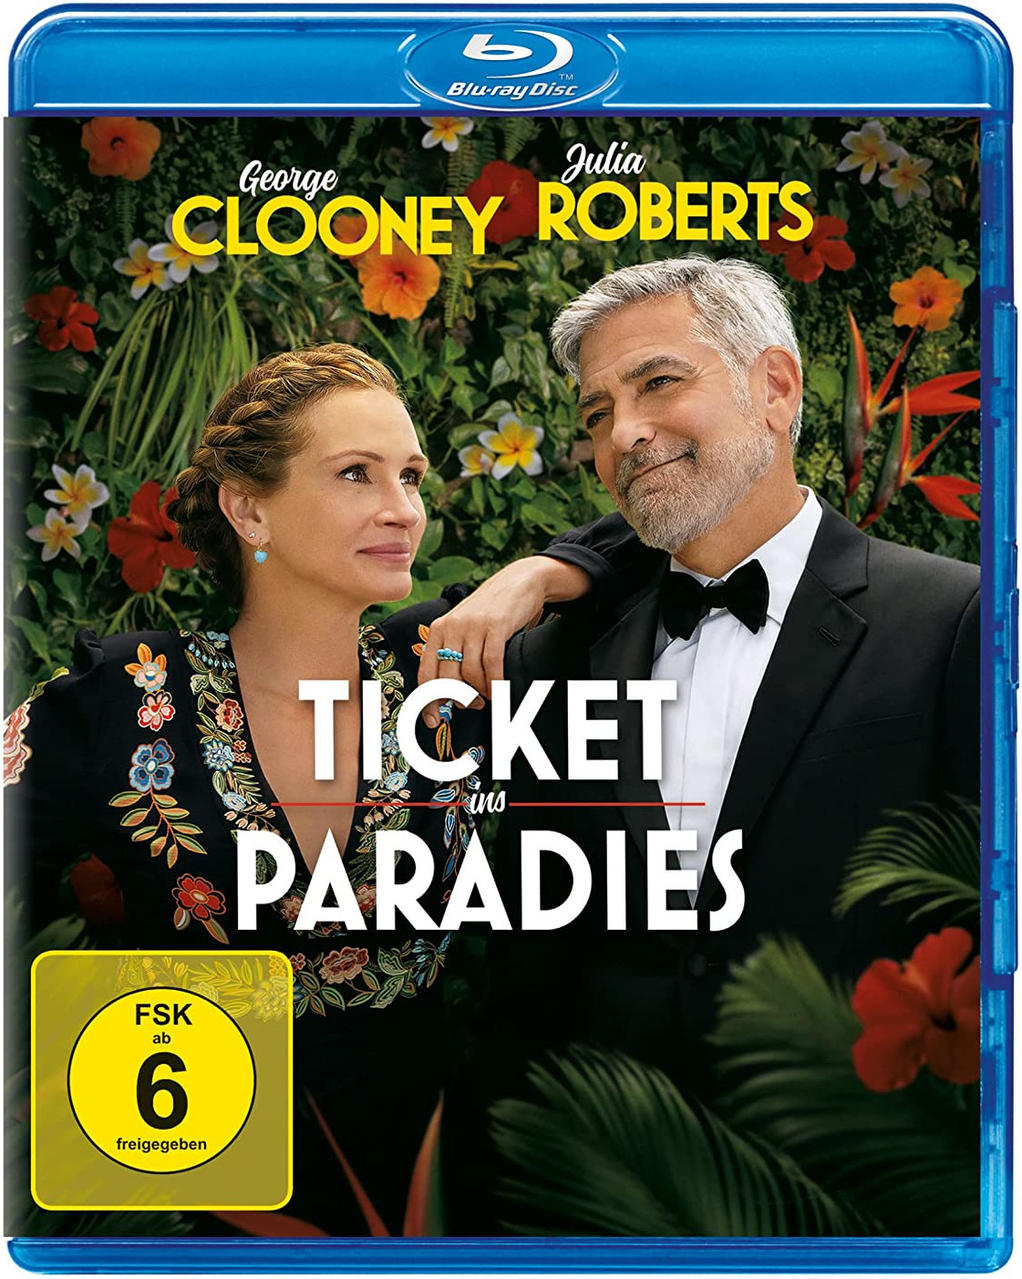 ins Blu-ray Ticket Paradies